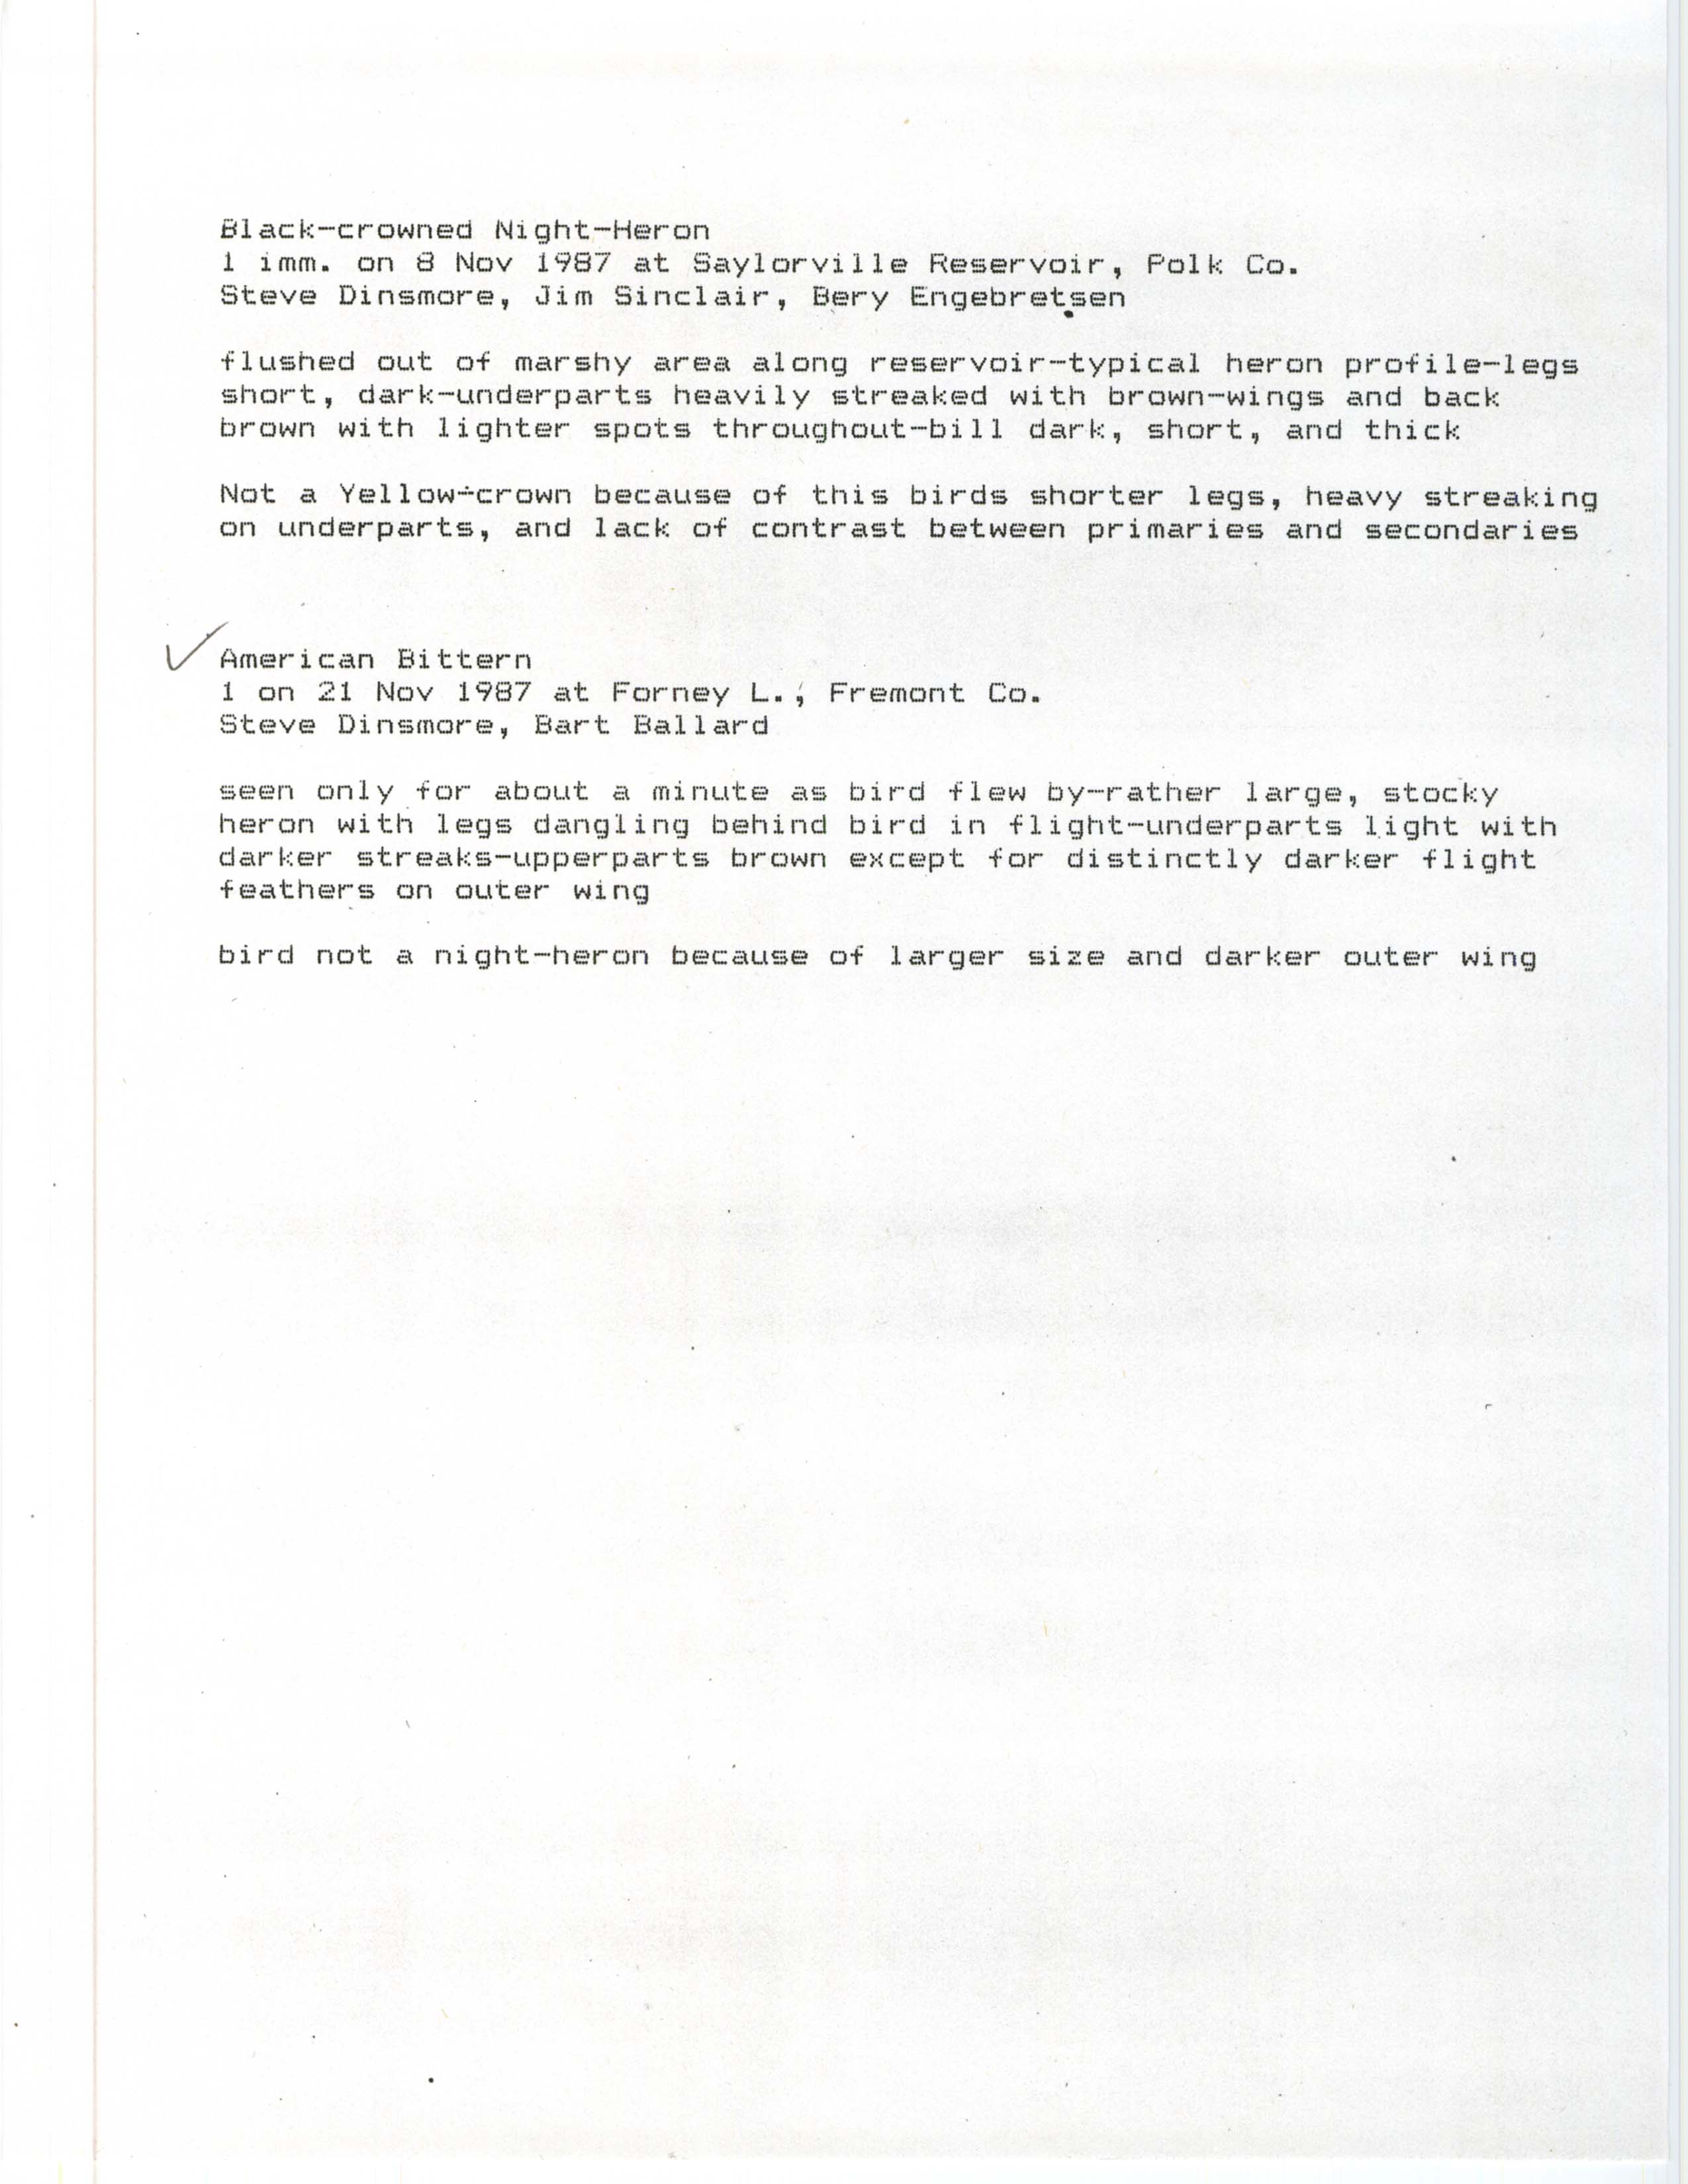 Documentation of American Bittern and Black-crowned Night Heron sightings, 1987